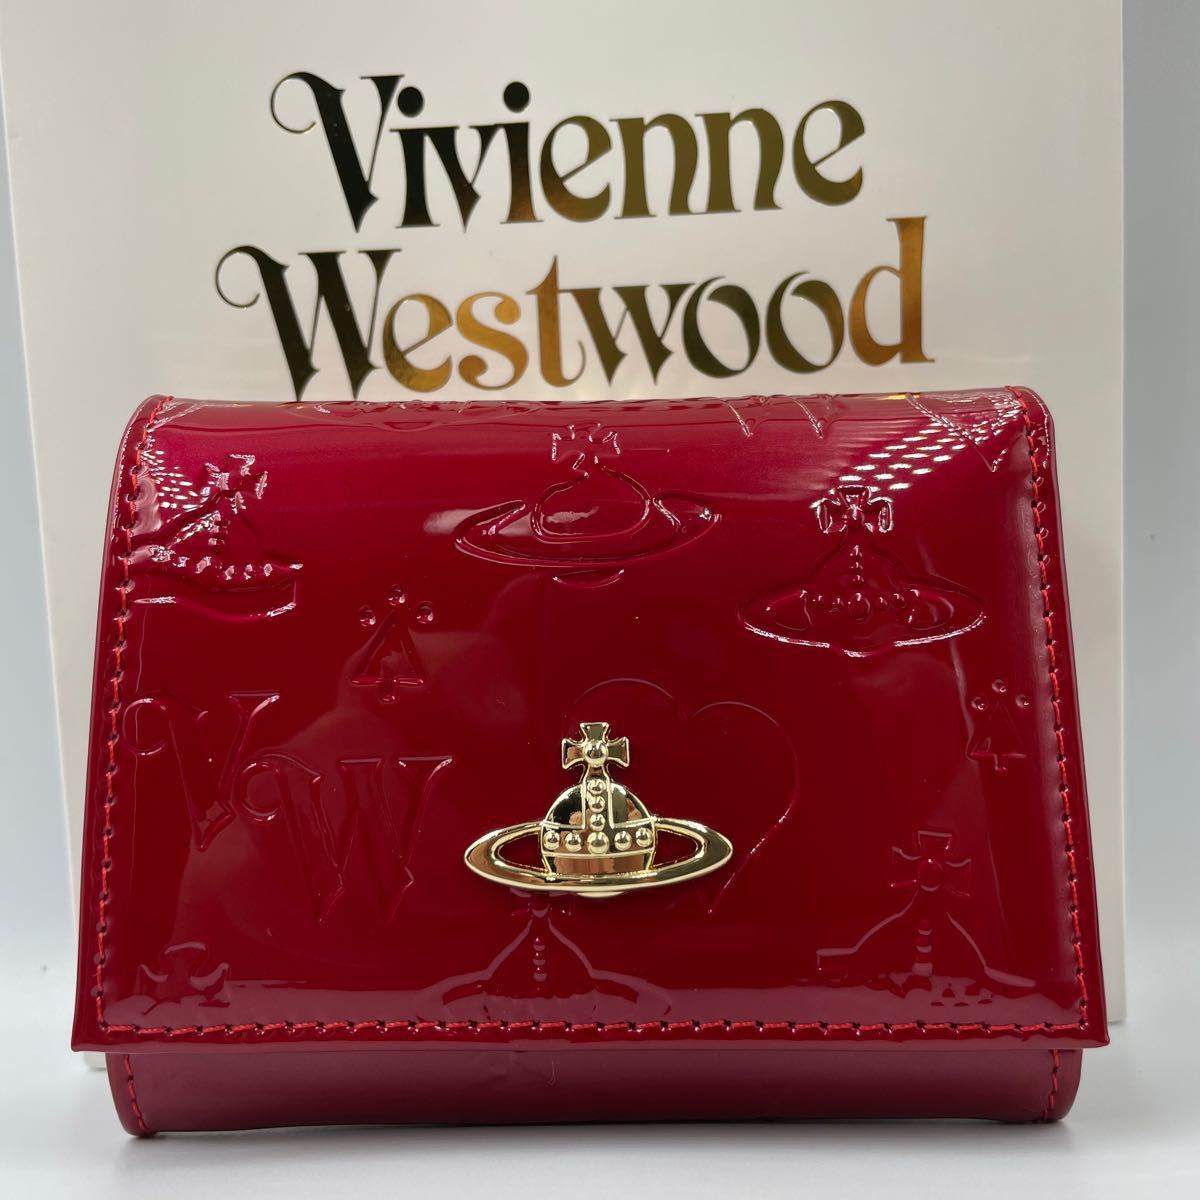 Vivienne Westwood ヴィヴィアンウエストウッド 三つ折り 財布【返金保証付き】